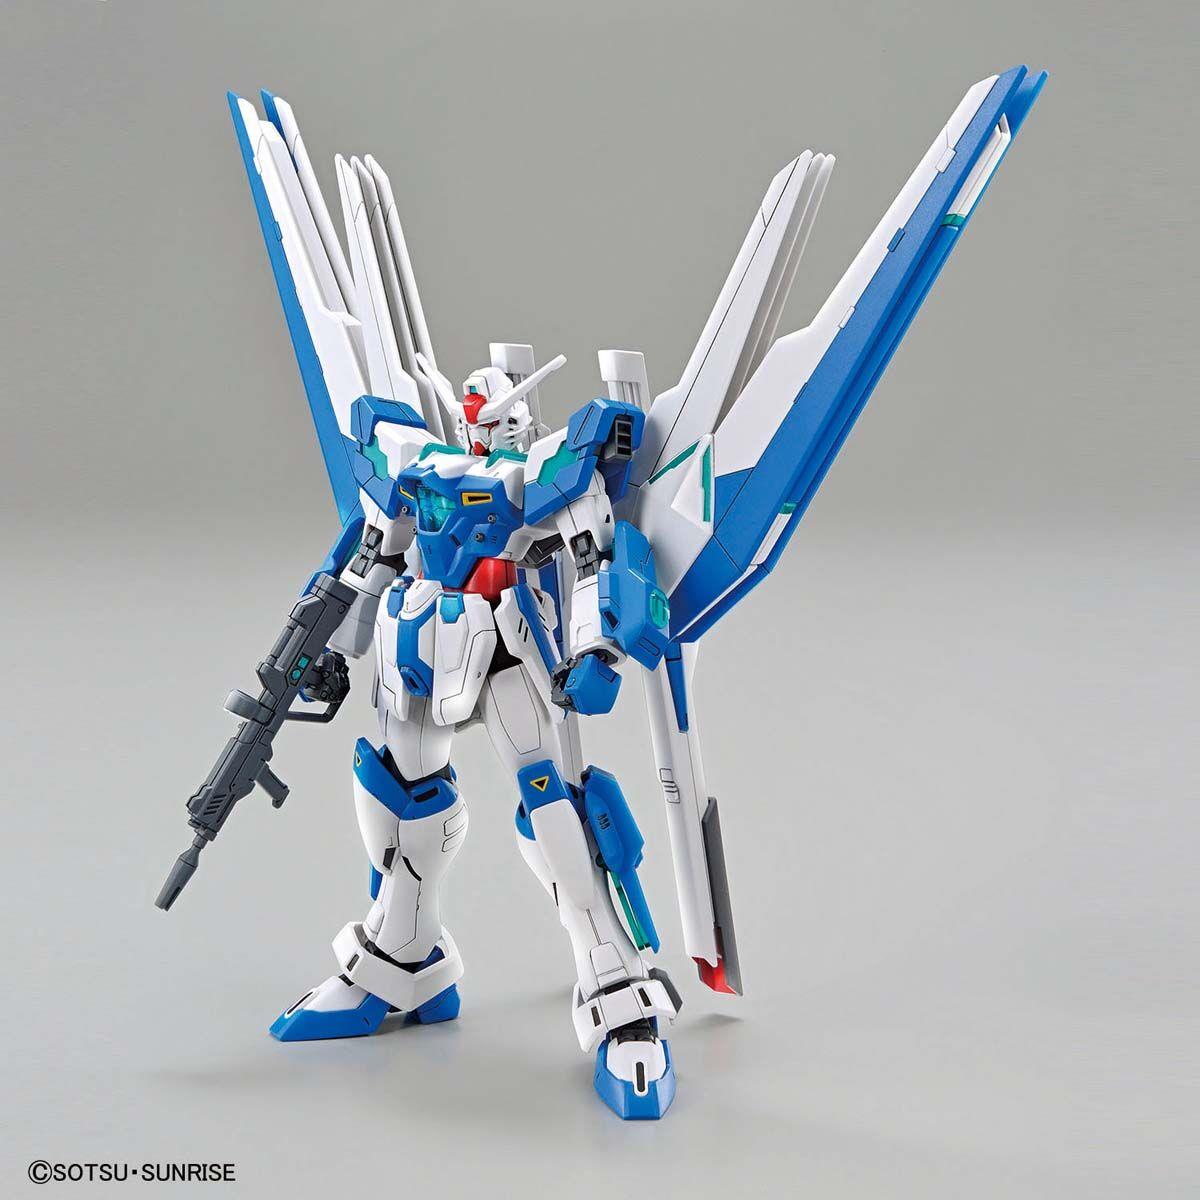 Gundam: Gundam Helios HG Model